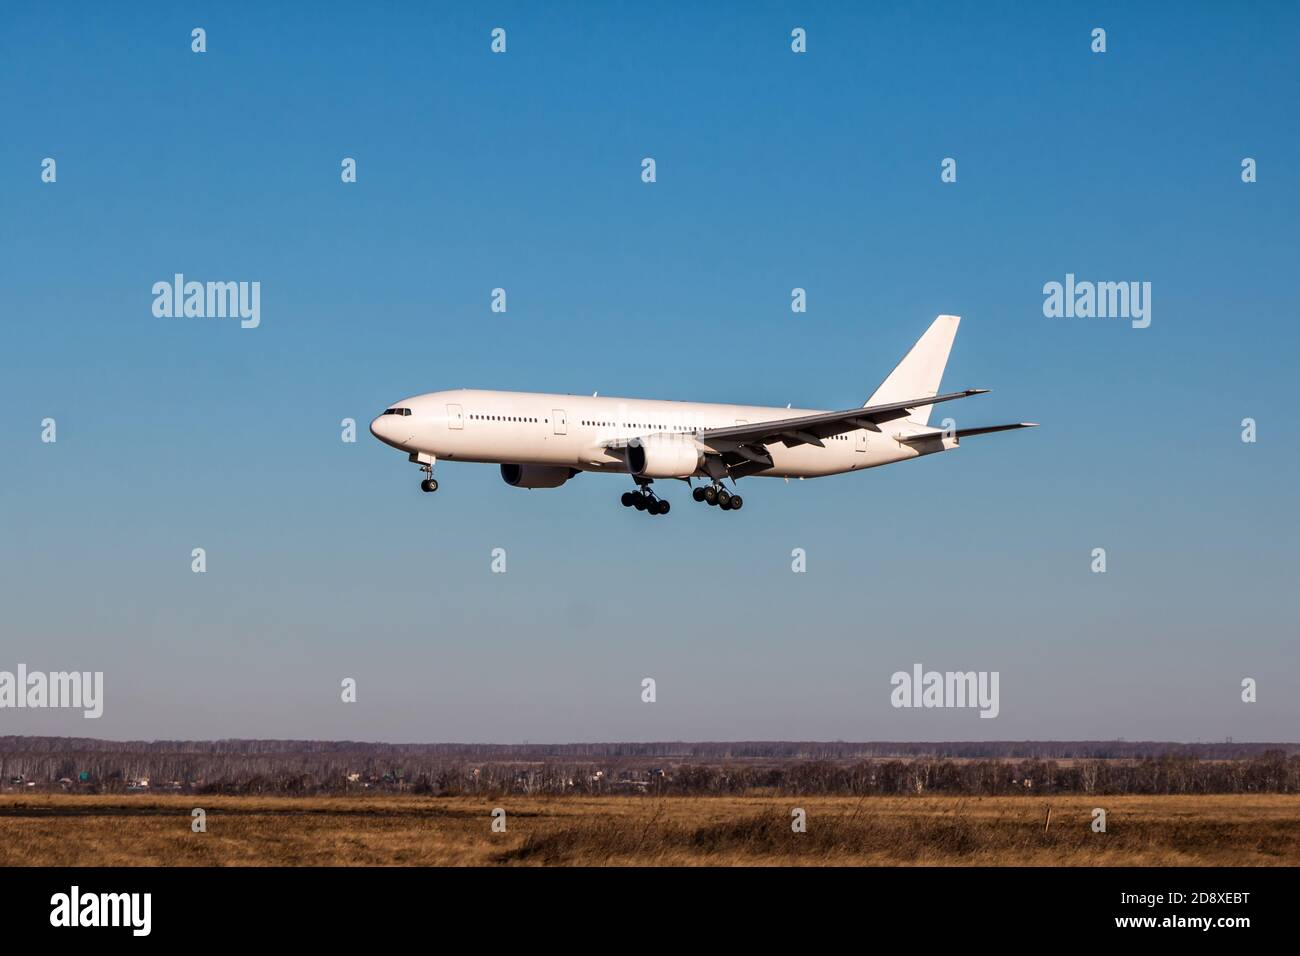 Landing white wide-body passenger aircraft Stock Photo